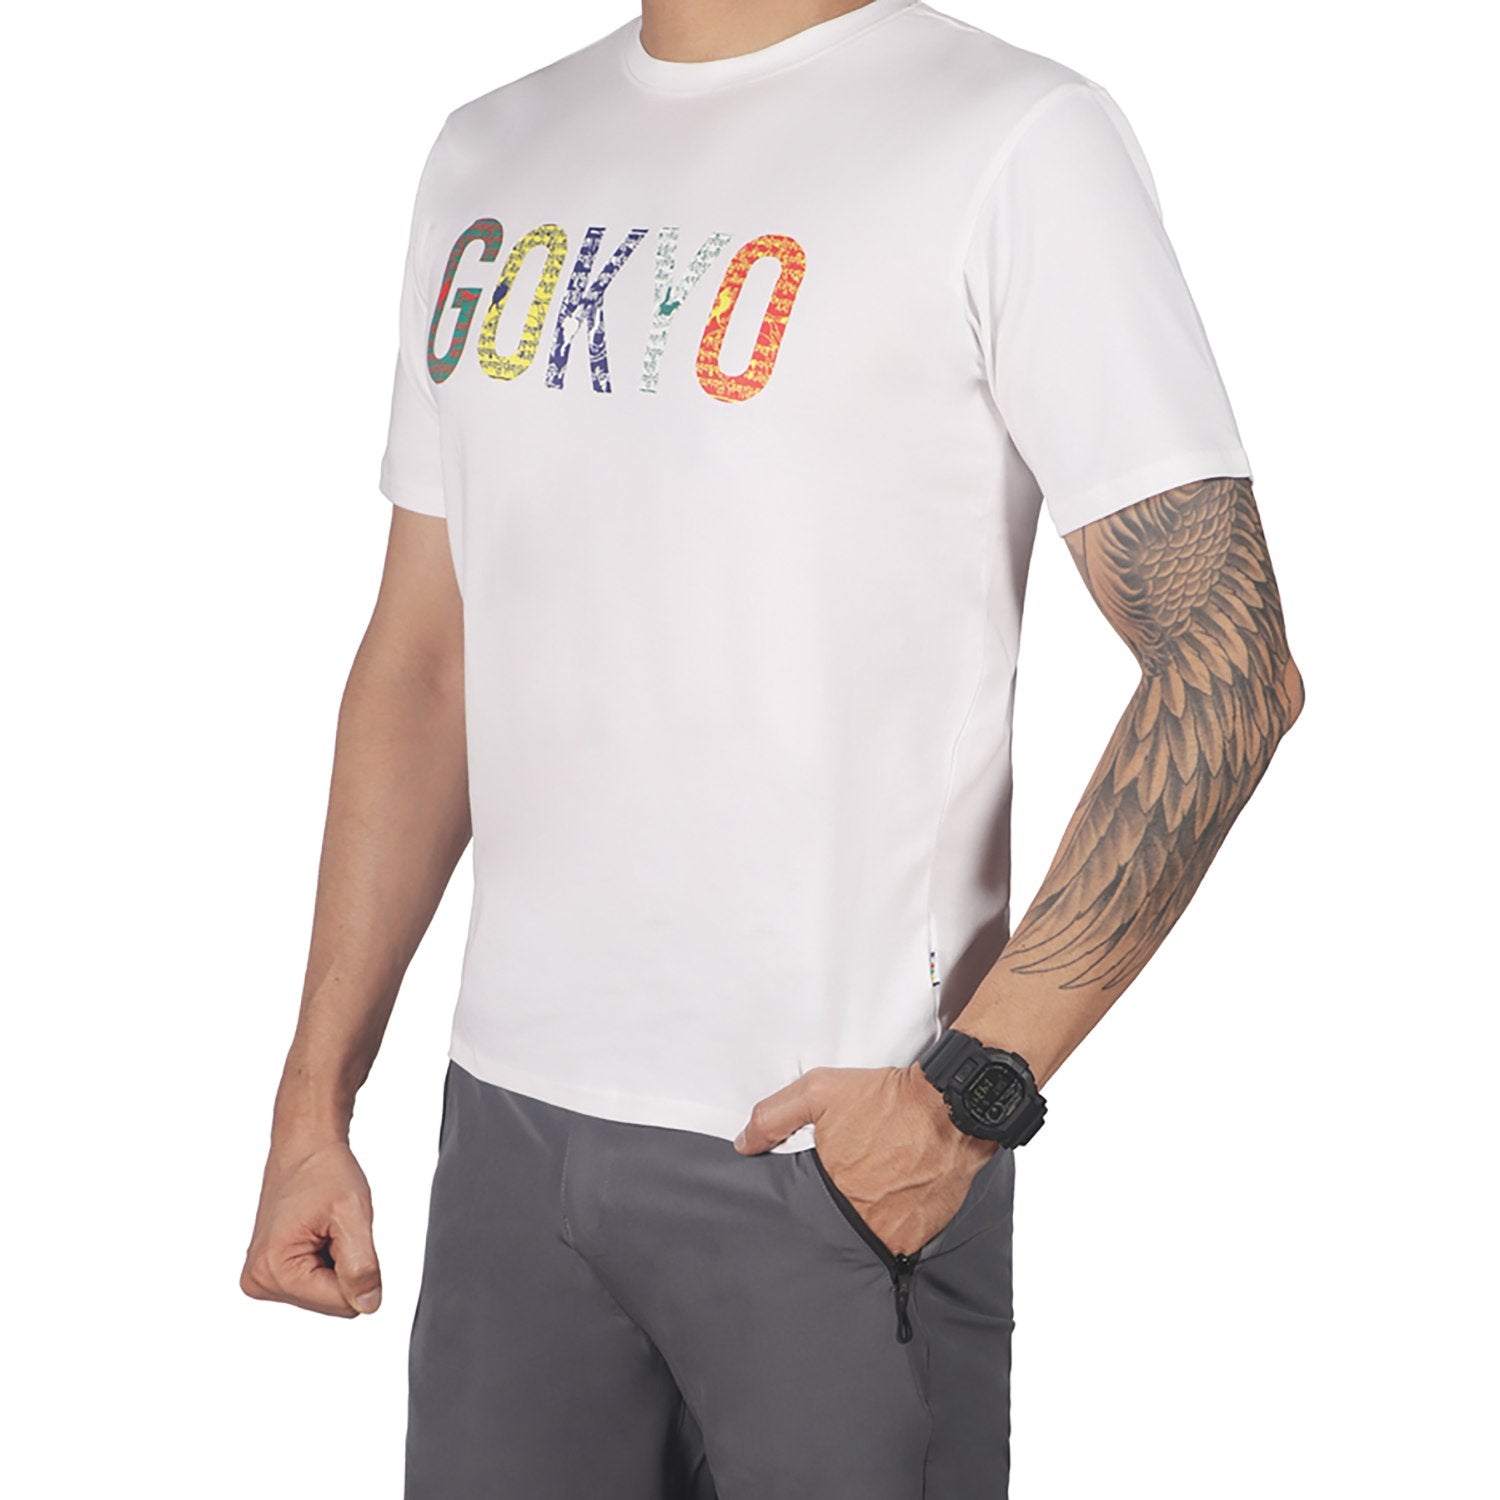 Buy GOKYO Originals Tshirt - Flag at Gokyo Outdoor Clothing & Gear